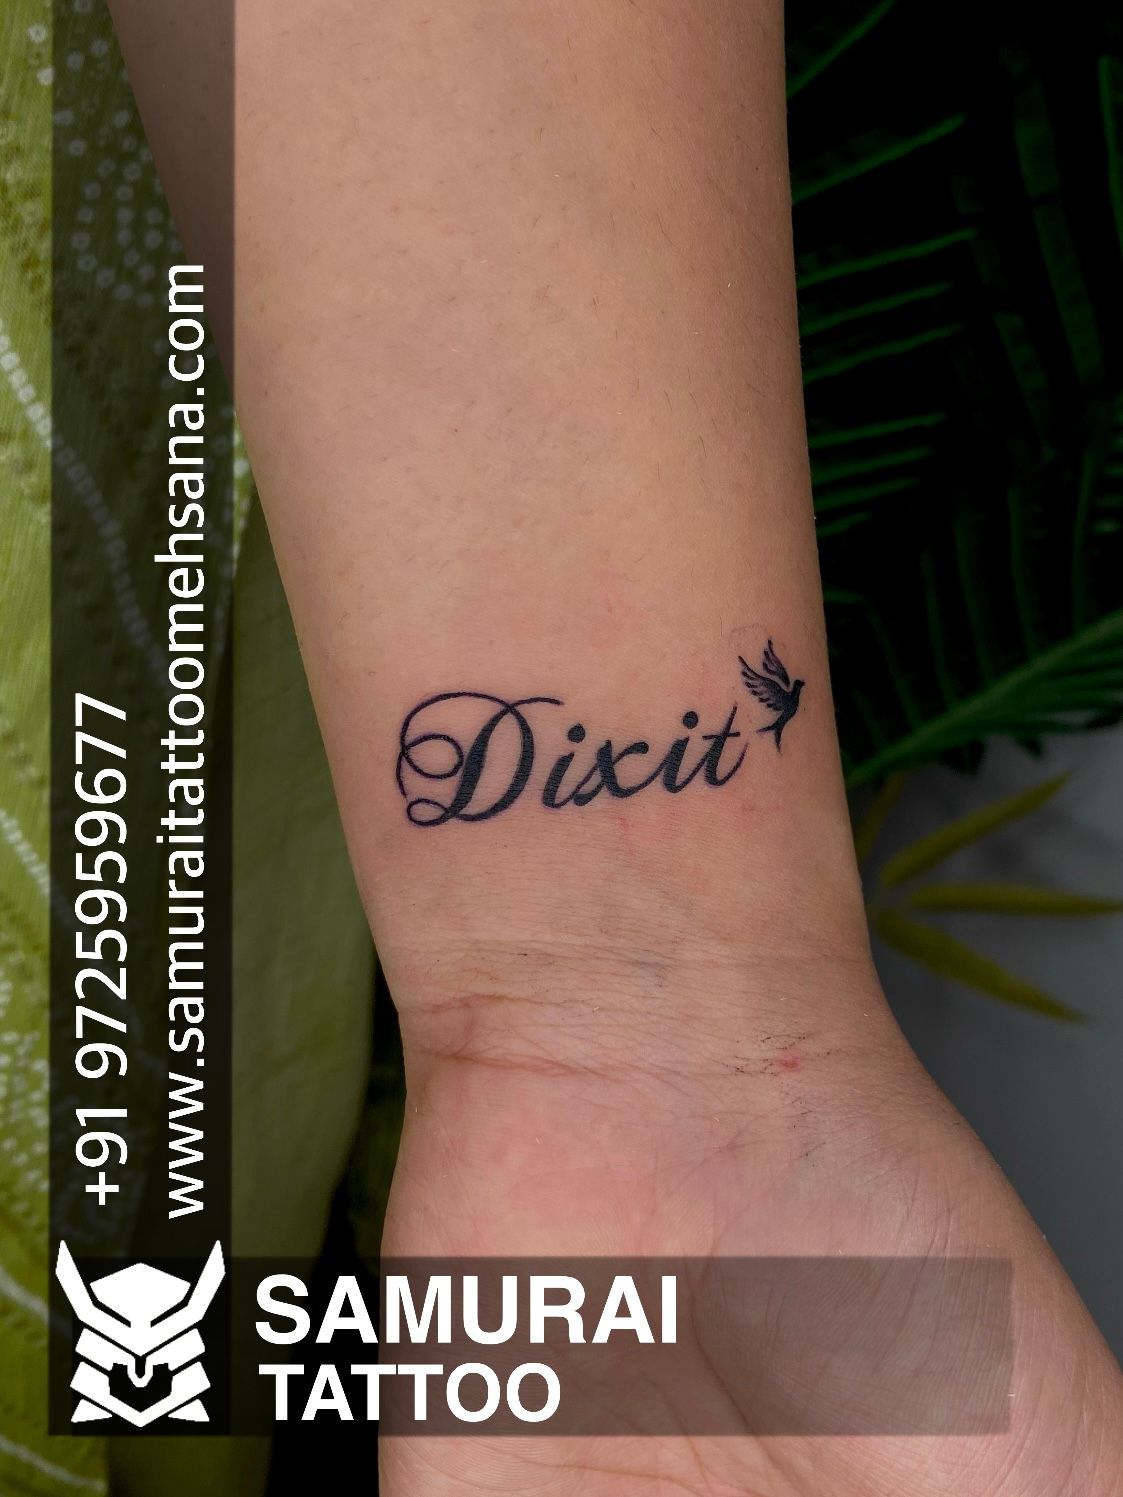 Tattoo uploaded by Vipul Chaudhary  Harshiv name tattoo  Harshiv tattoo   Harshiv tattoo ideas  Tattoodo